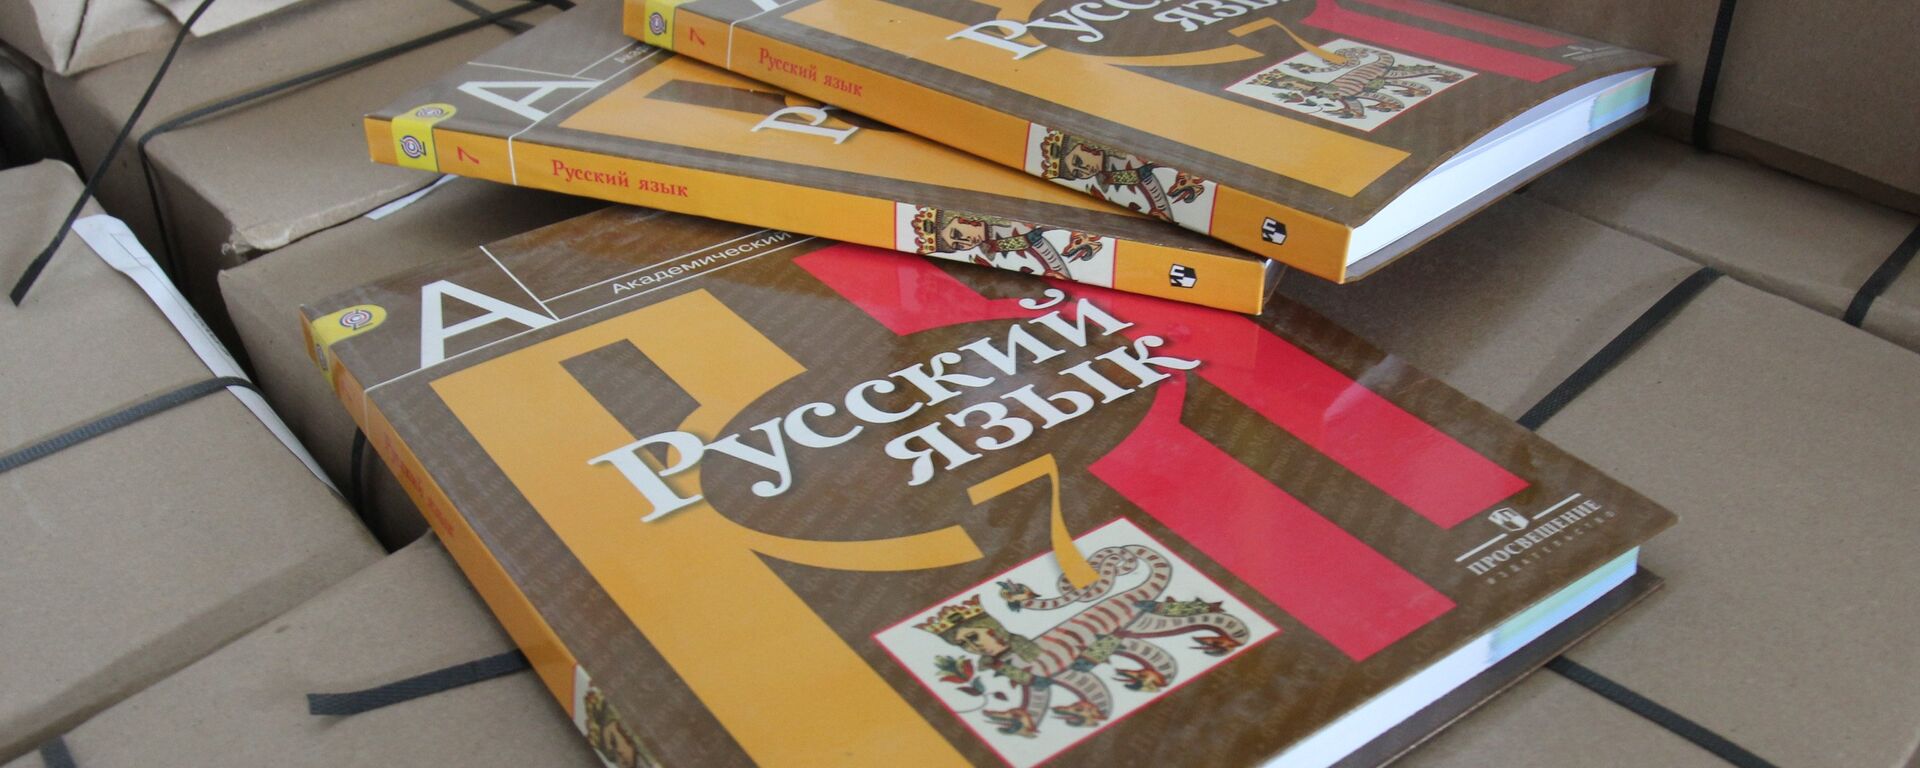 Textbooks on the Russian language. (File) - Sputnik Moldova, 1920, 31.05.2021